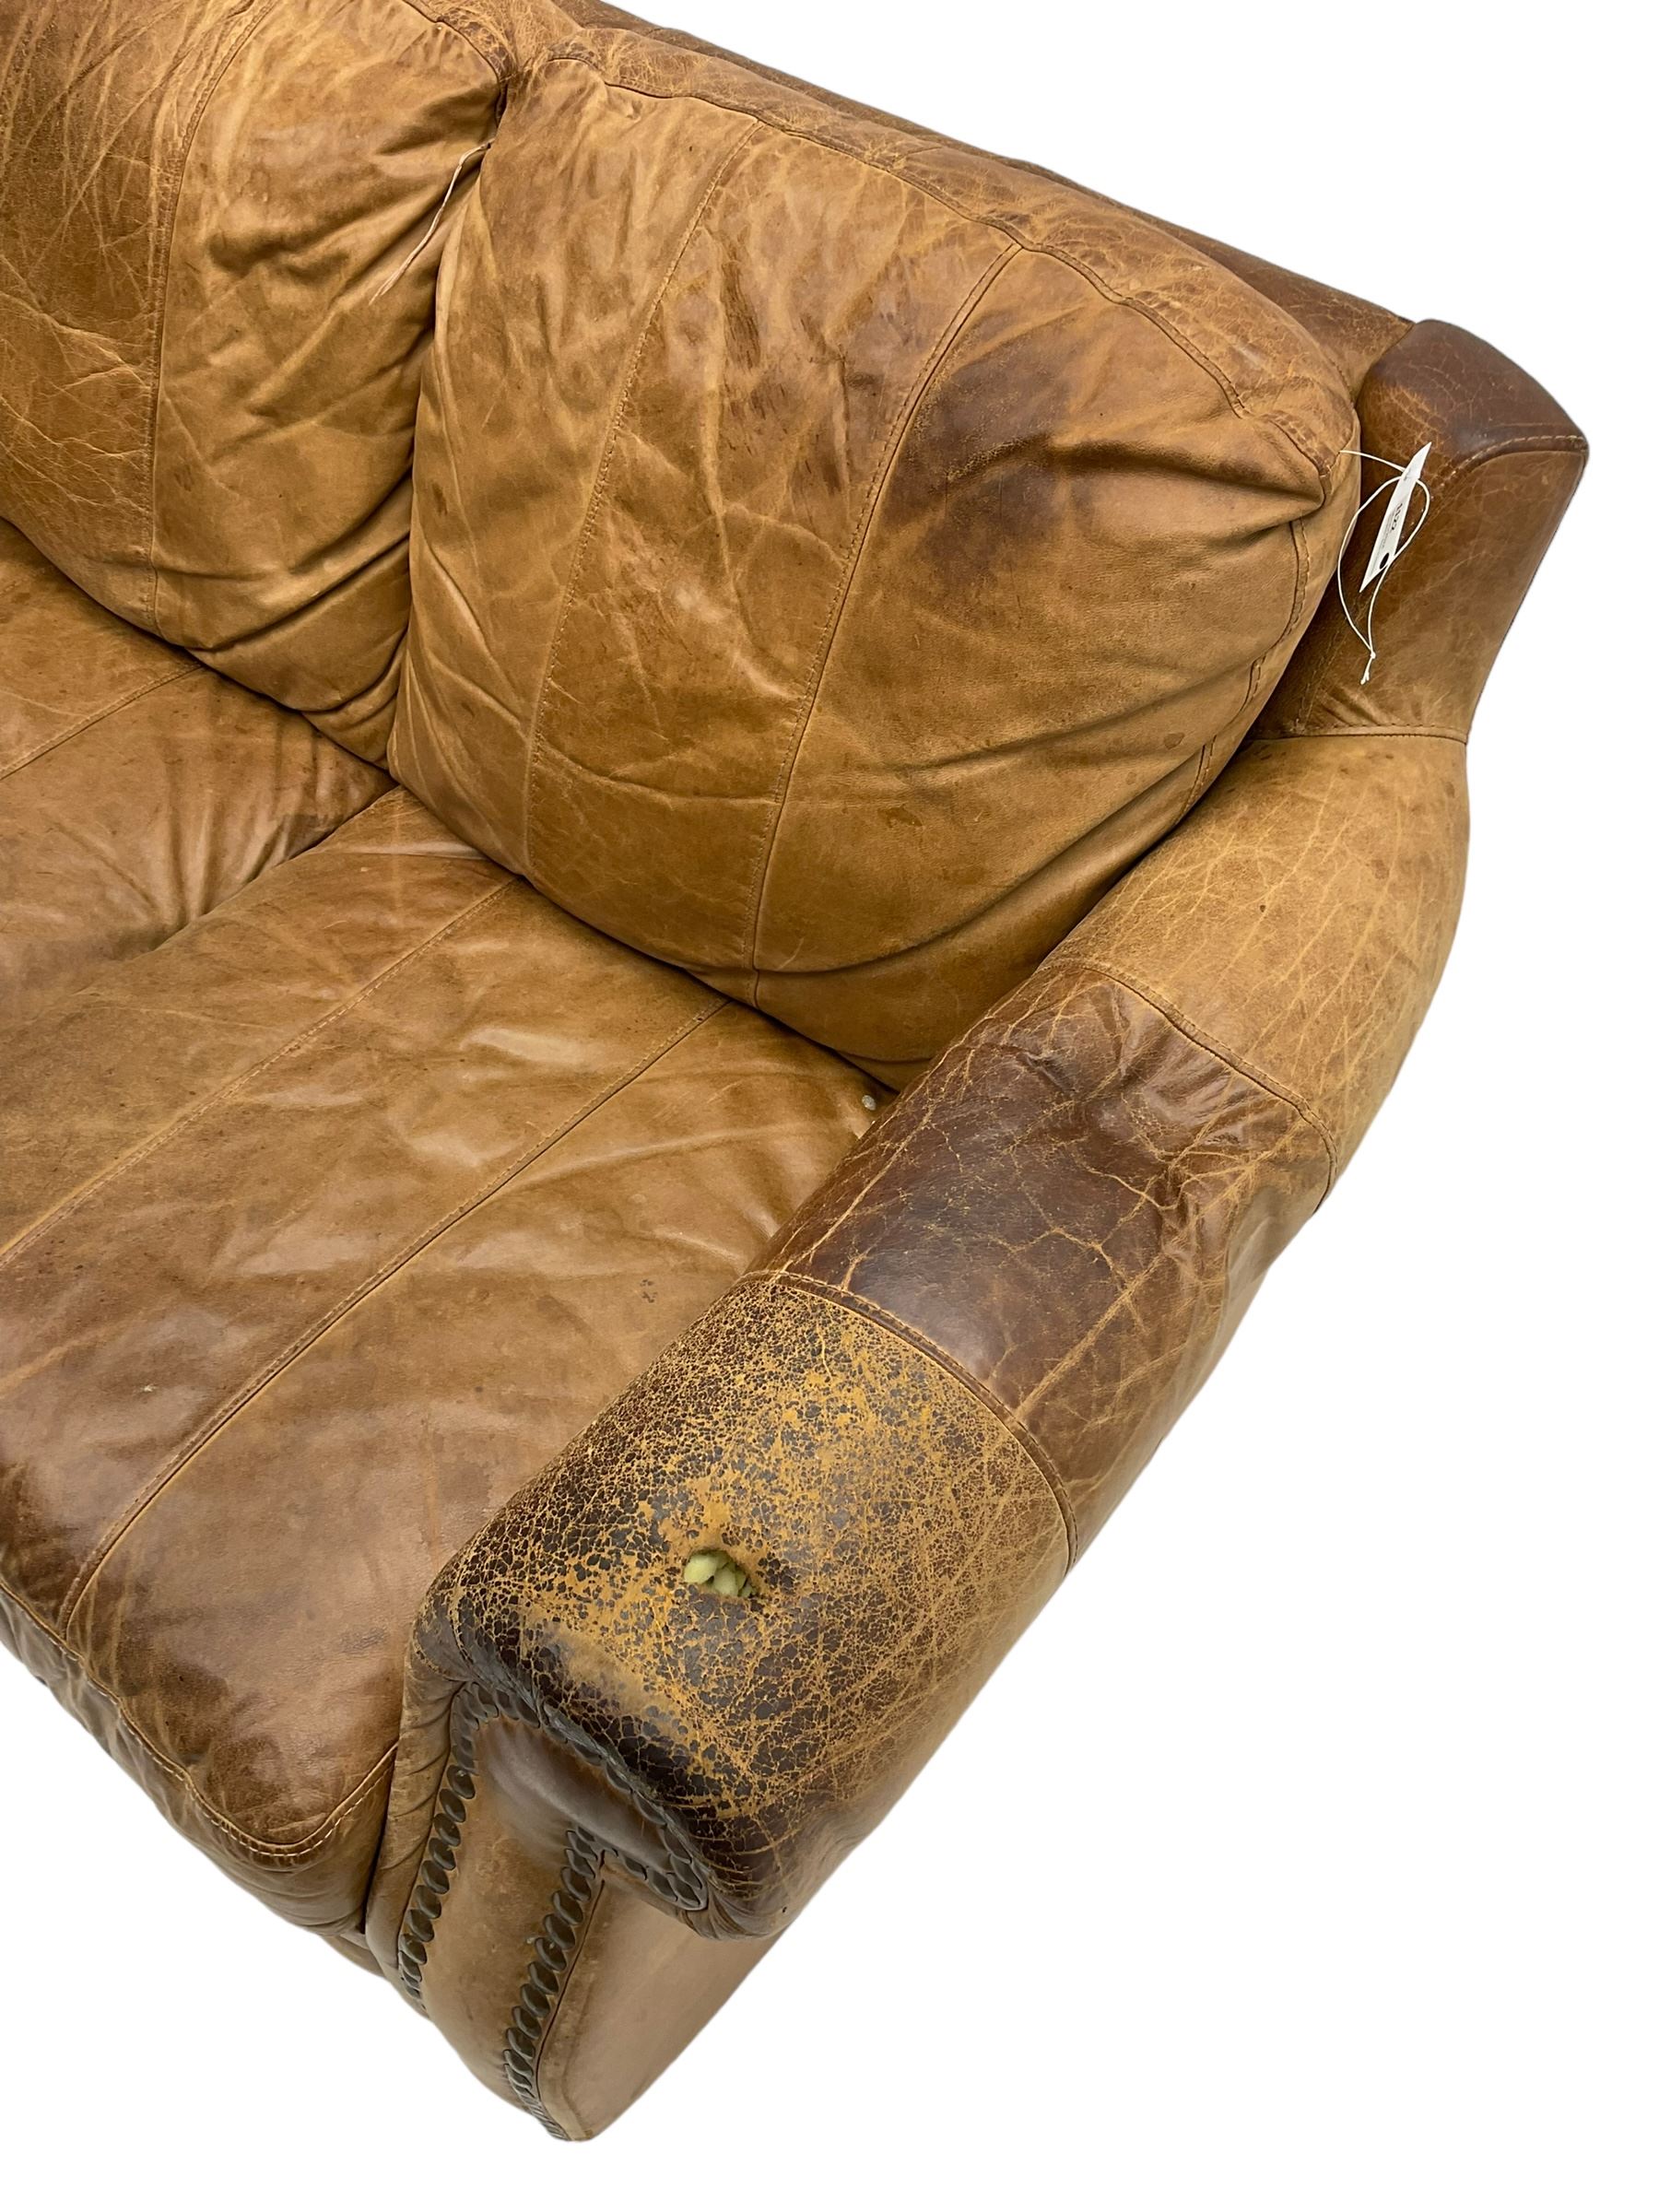 Two-seat club sofa - Image 5 of 7